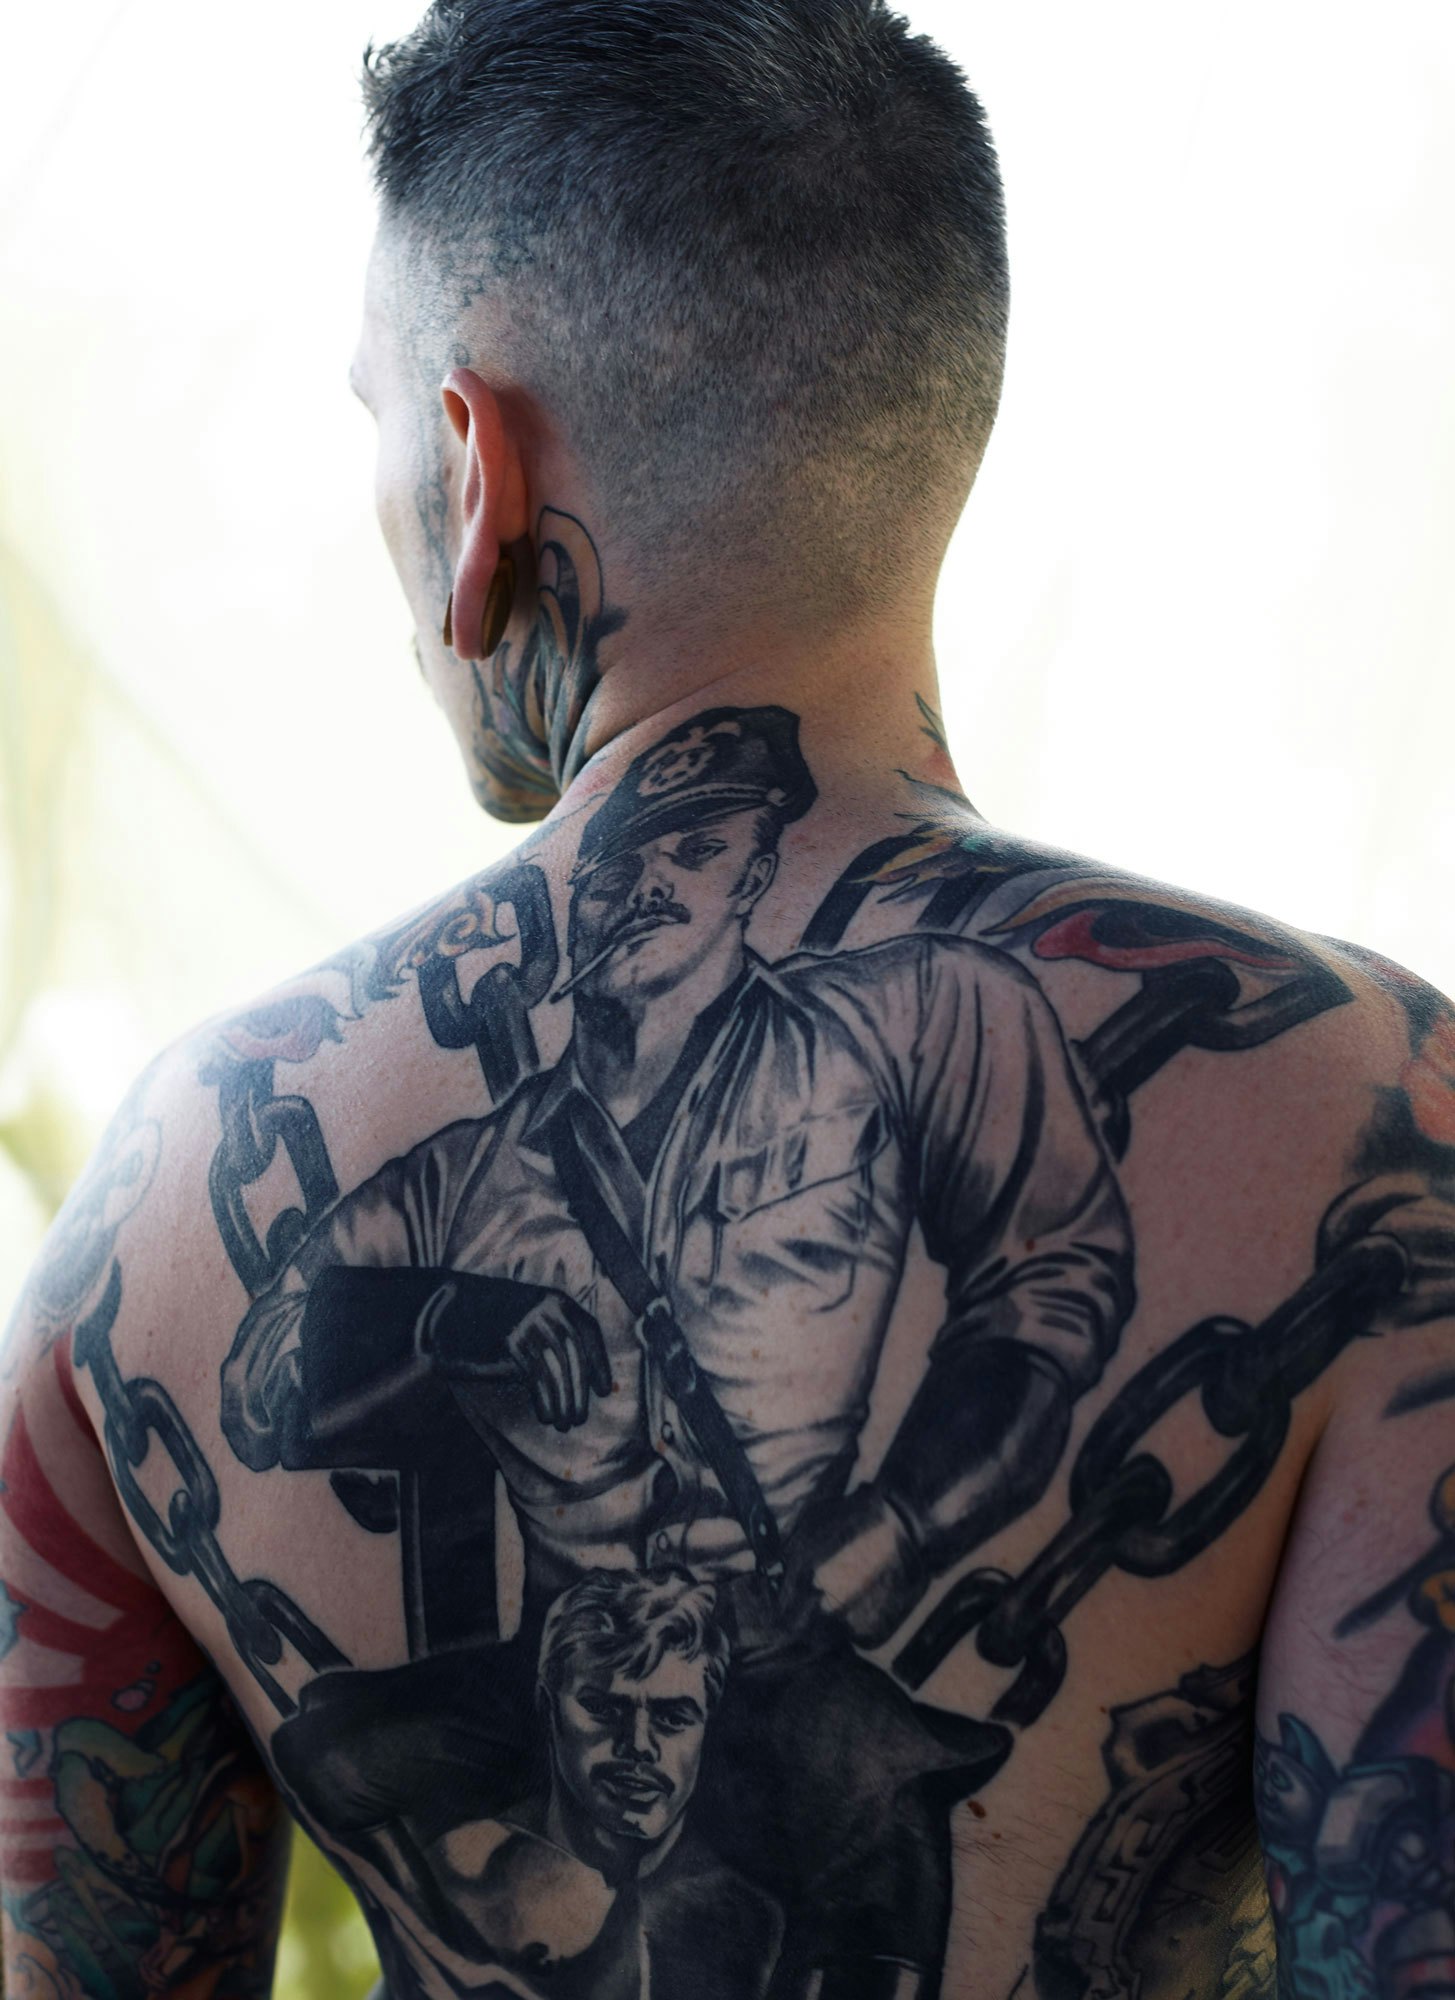 Tom of Finland cop tattoo made by me at the Black Box Studio  Tattoos  Portrait tattoo Cop tattoos